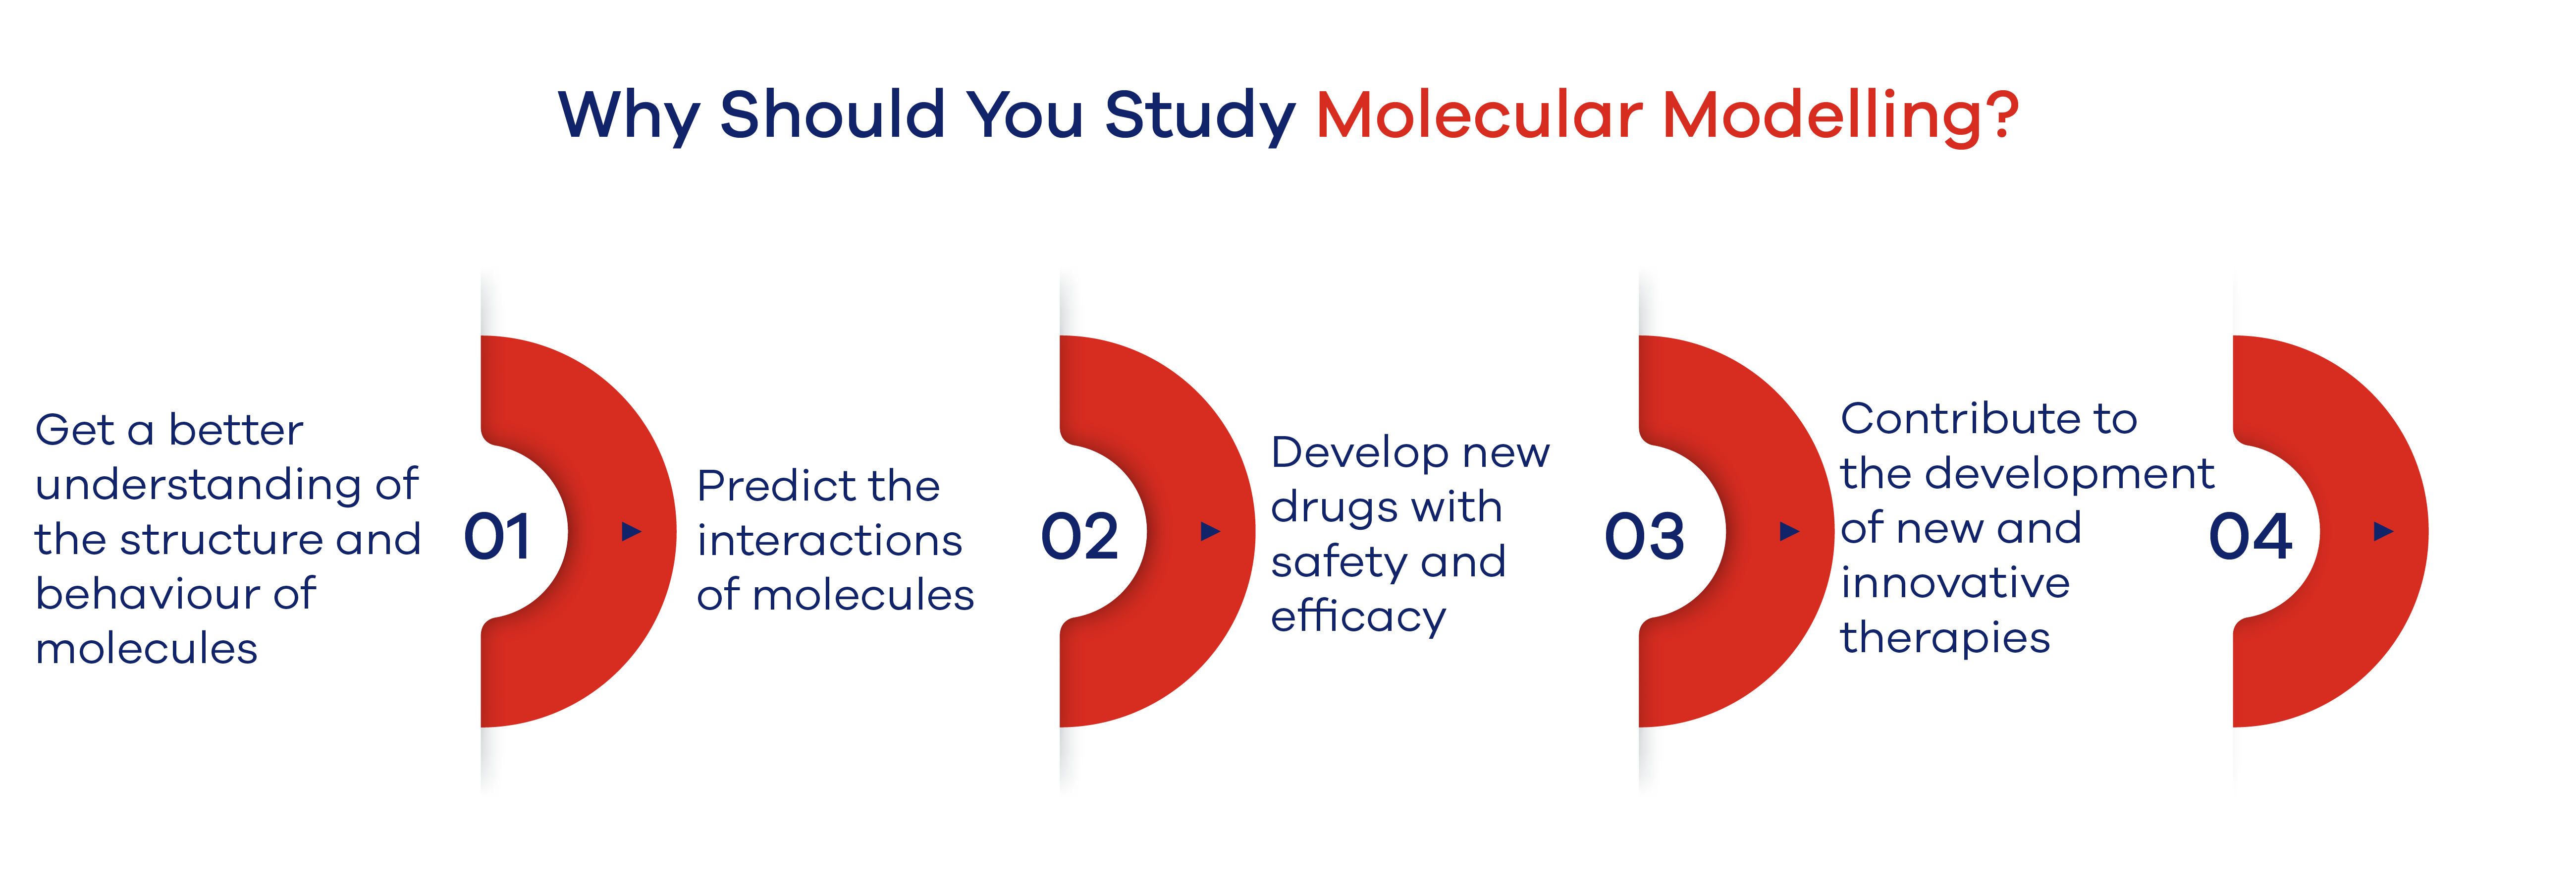 Why Should You Study Molecular Modelling? 